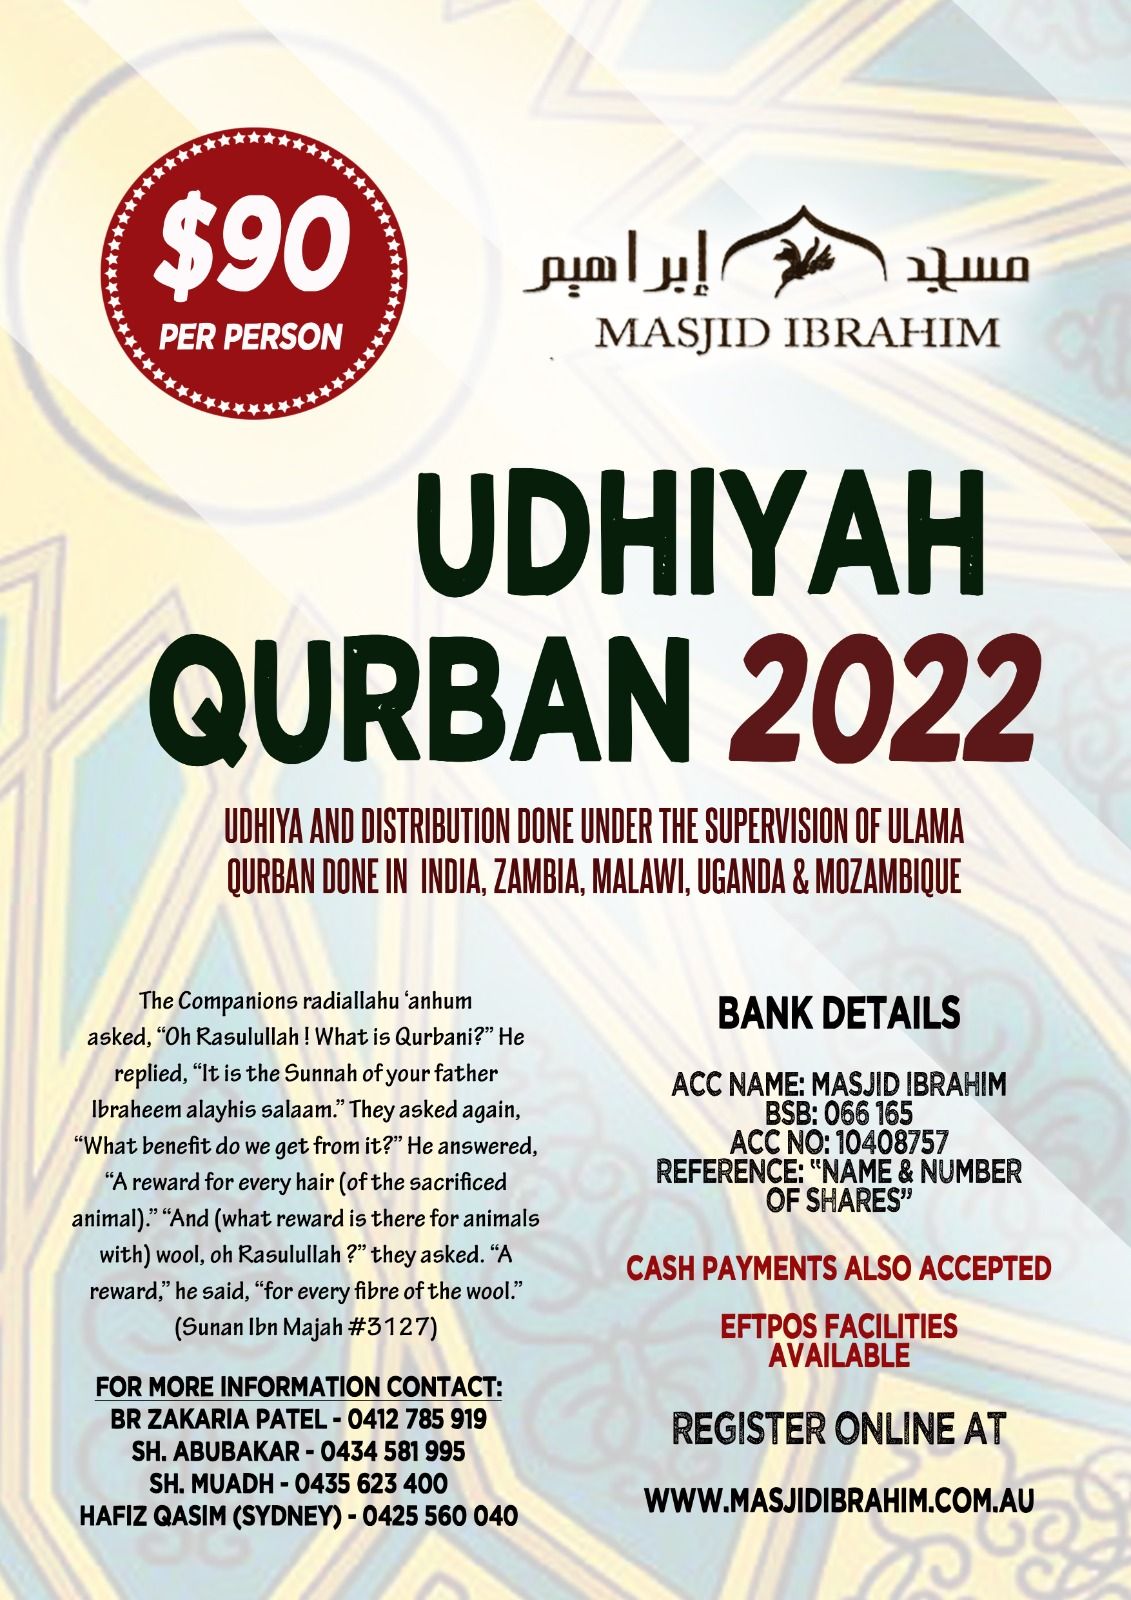 Masjid Ibrahim – Qurban 2022